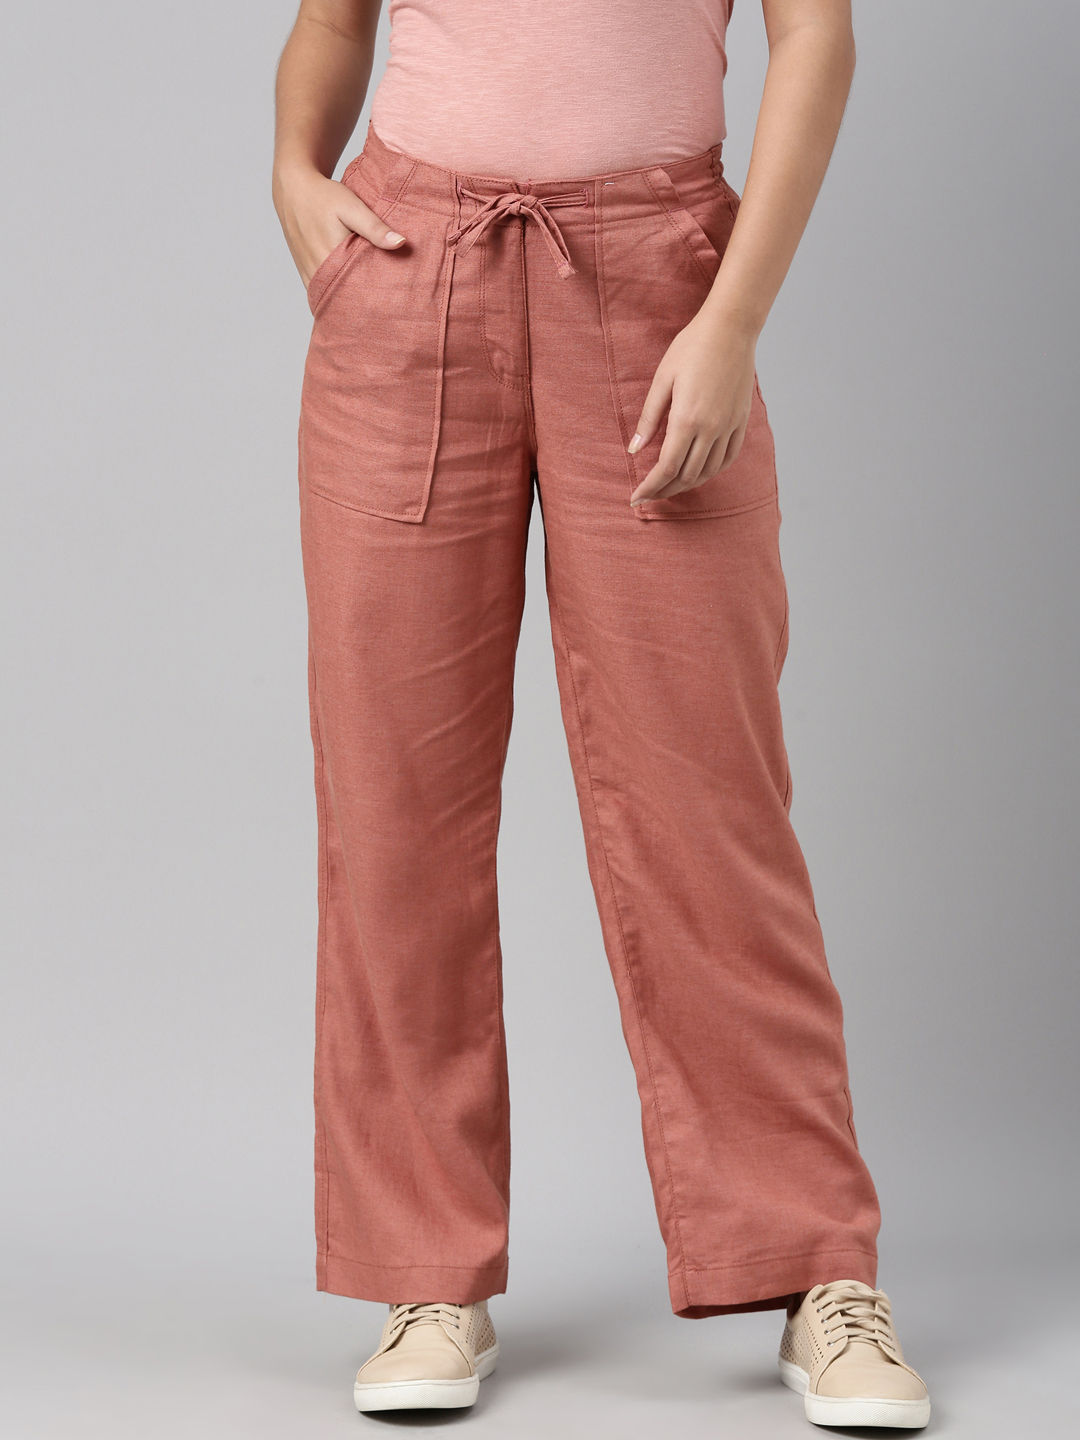 15 best linen pants for women, plus styling tips